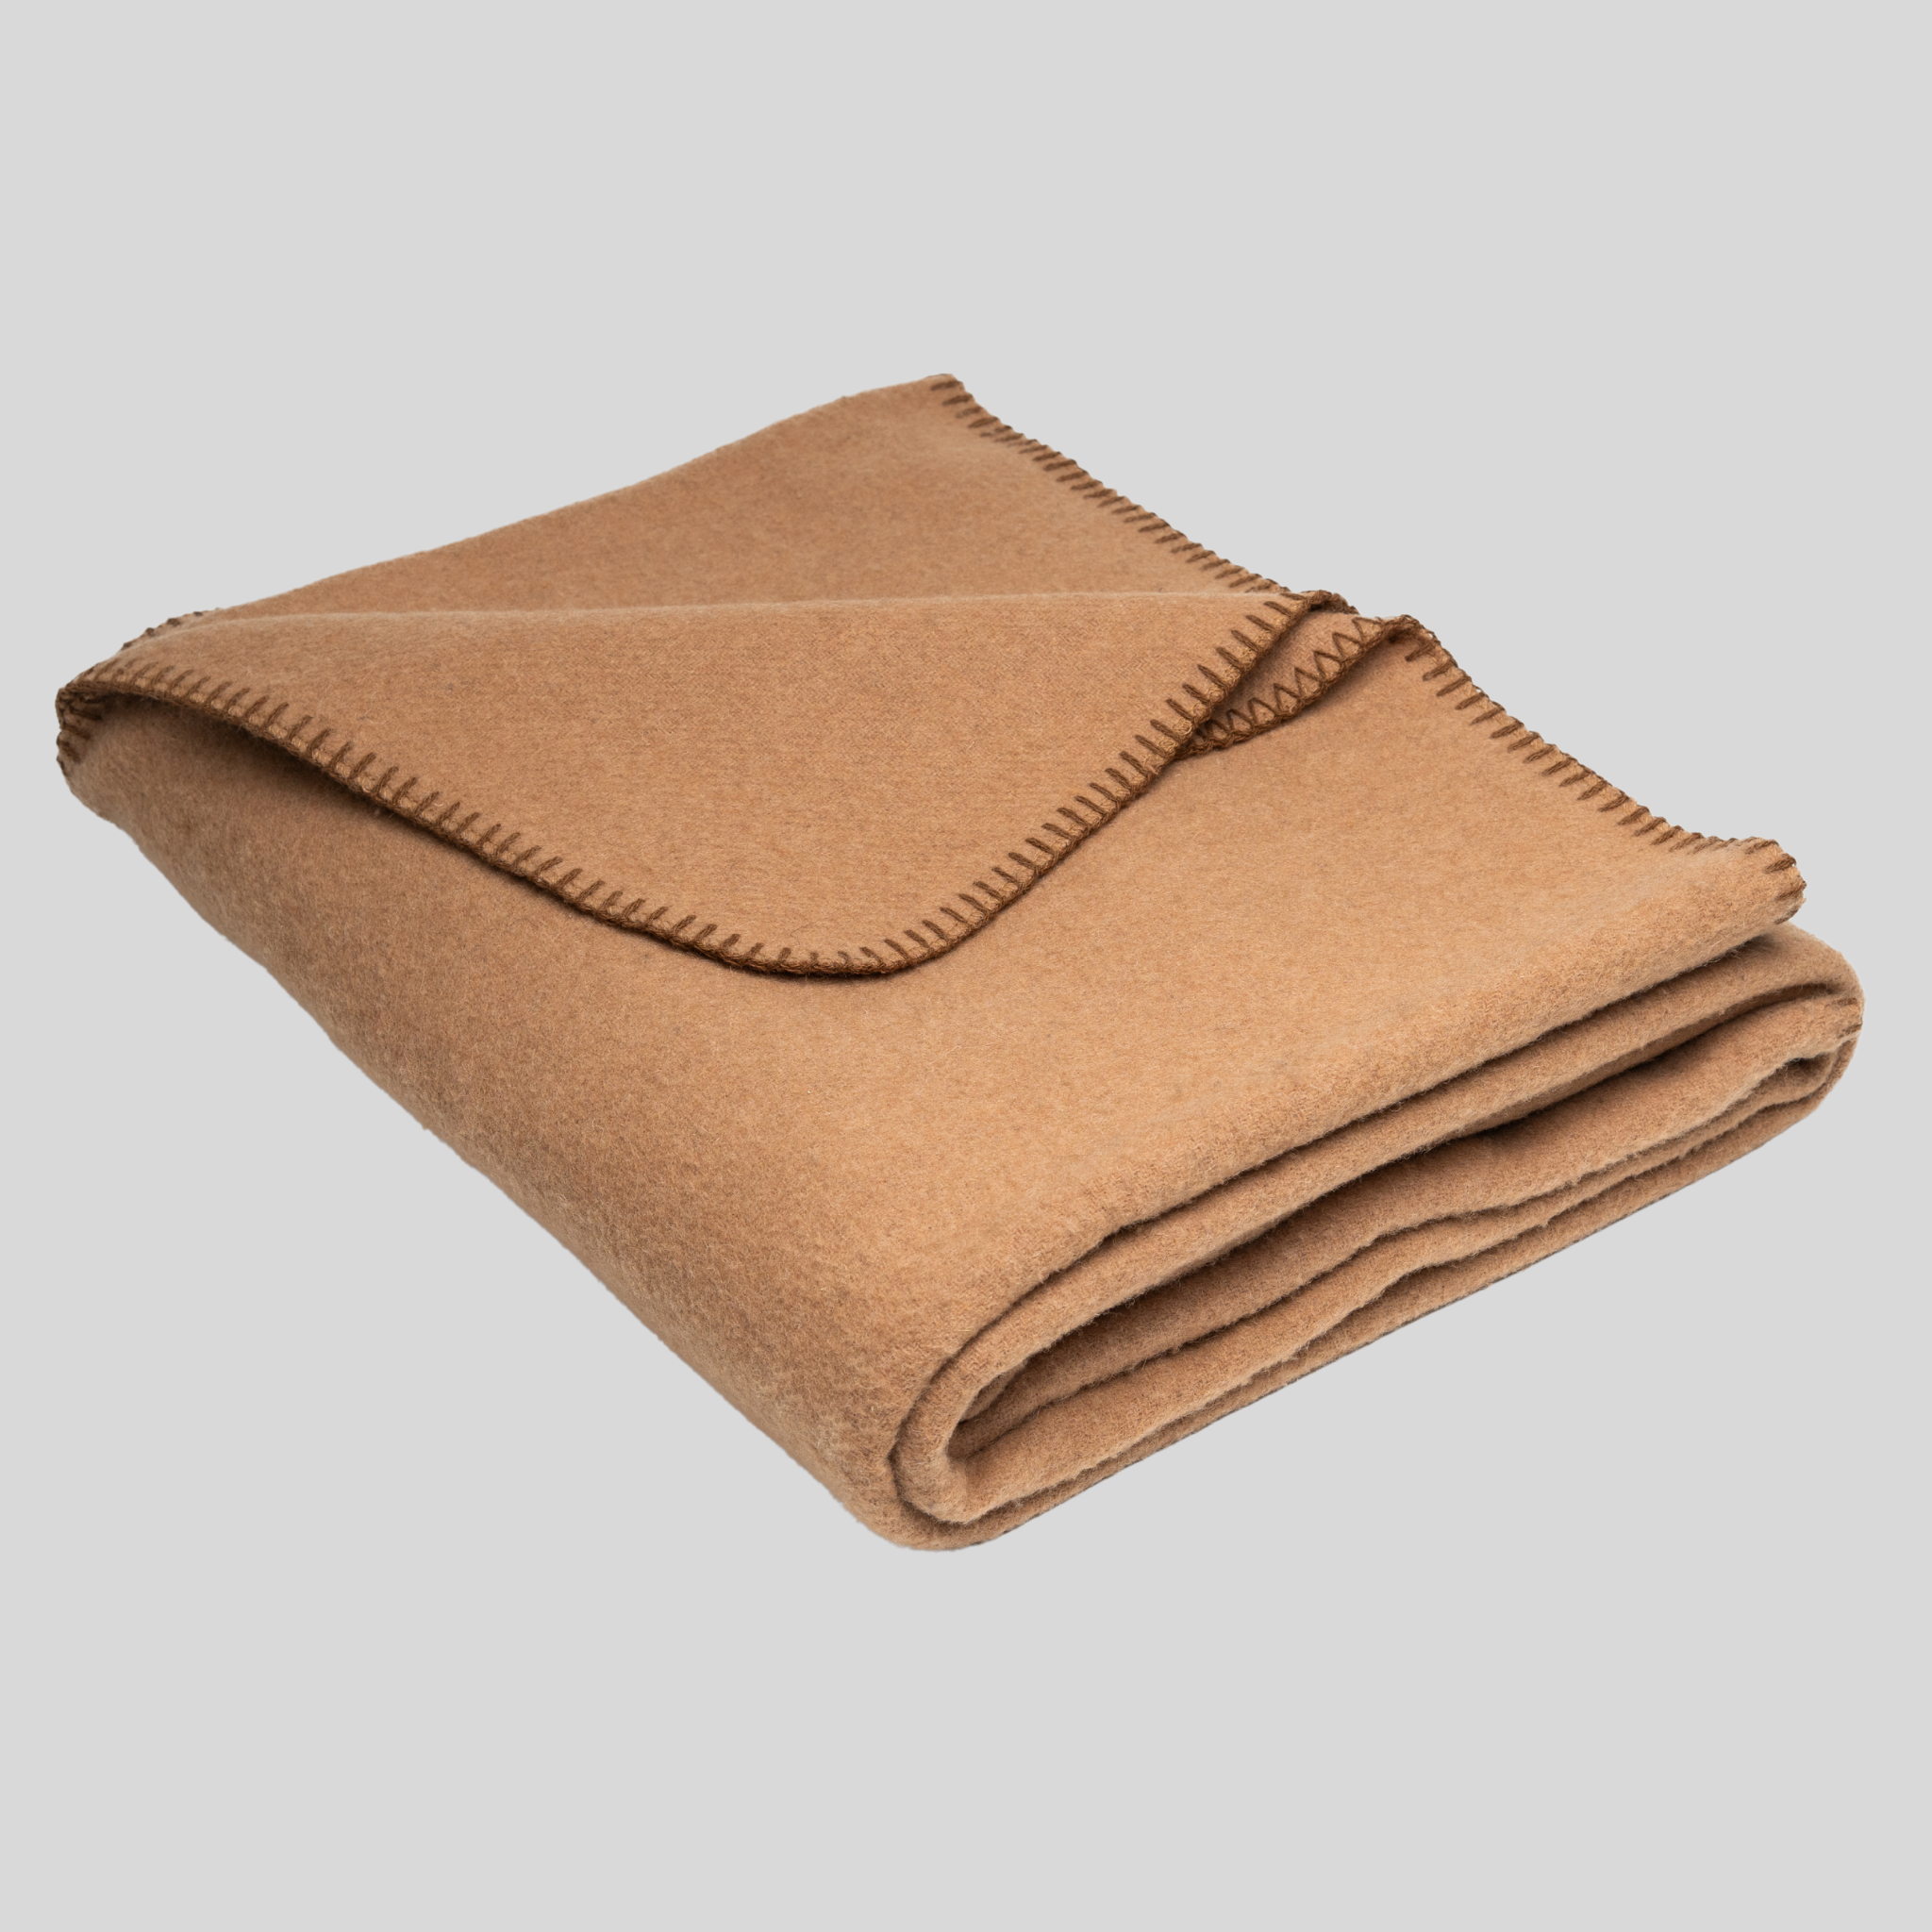 LAMBHILL CO. Sahara Wool Blanket (leatherette harness included)